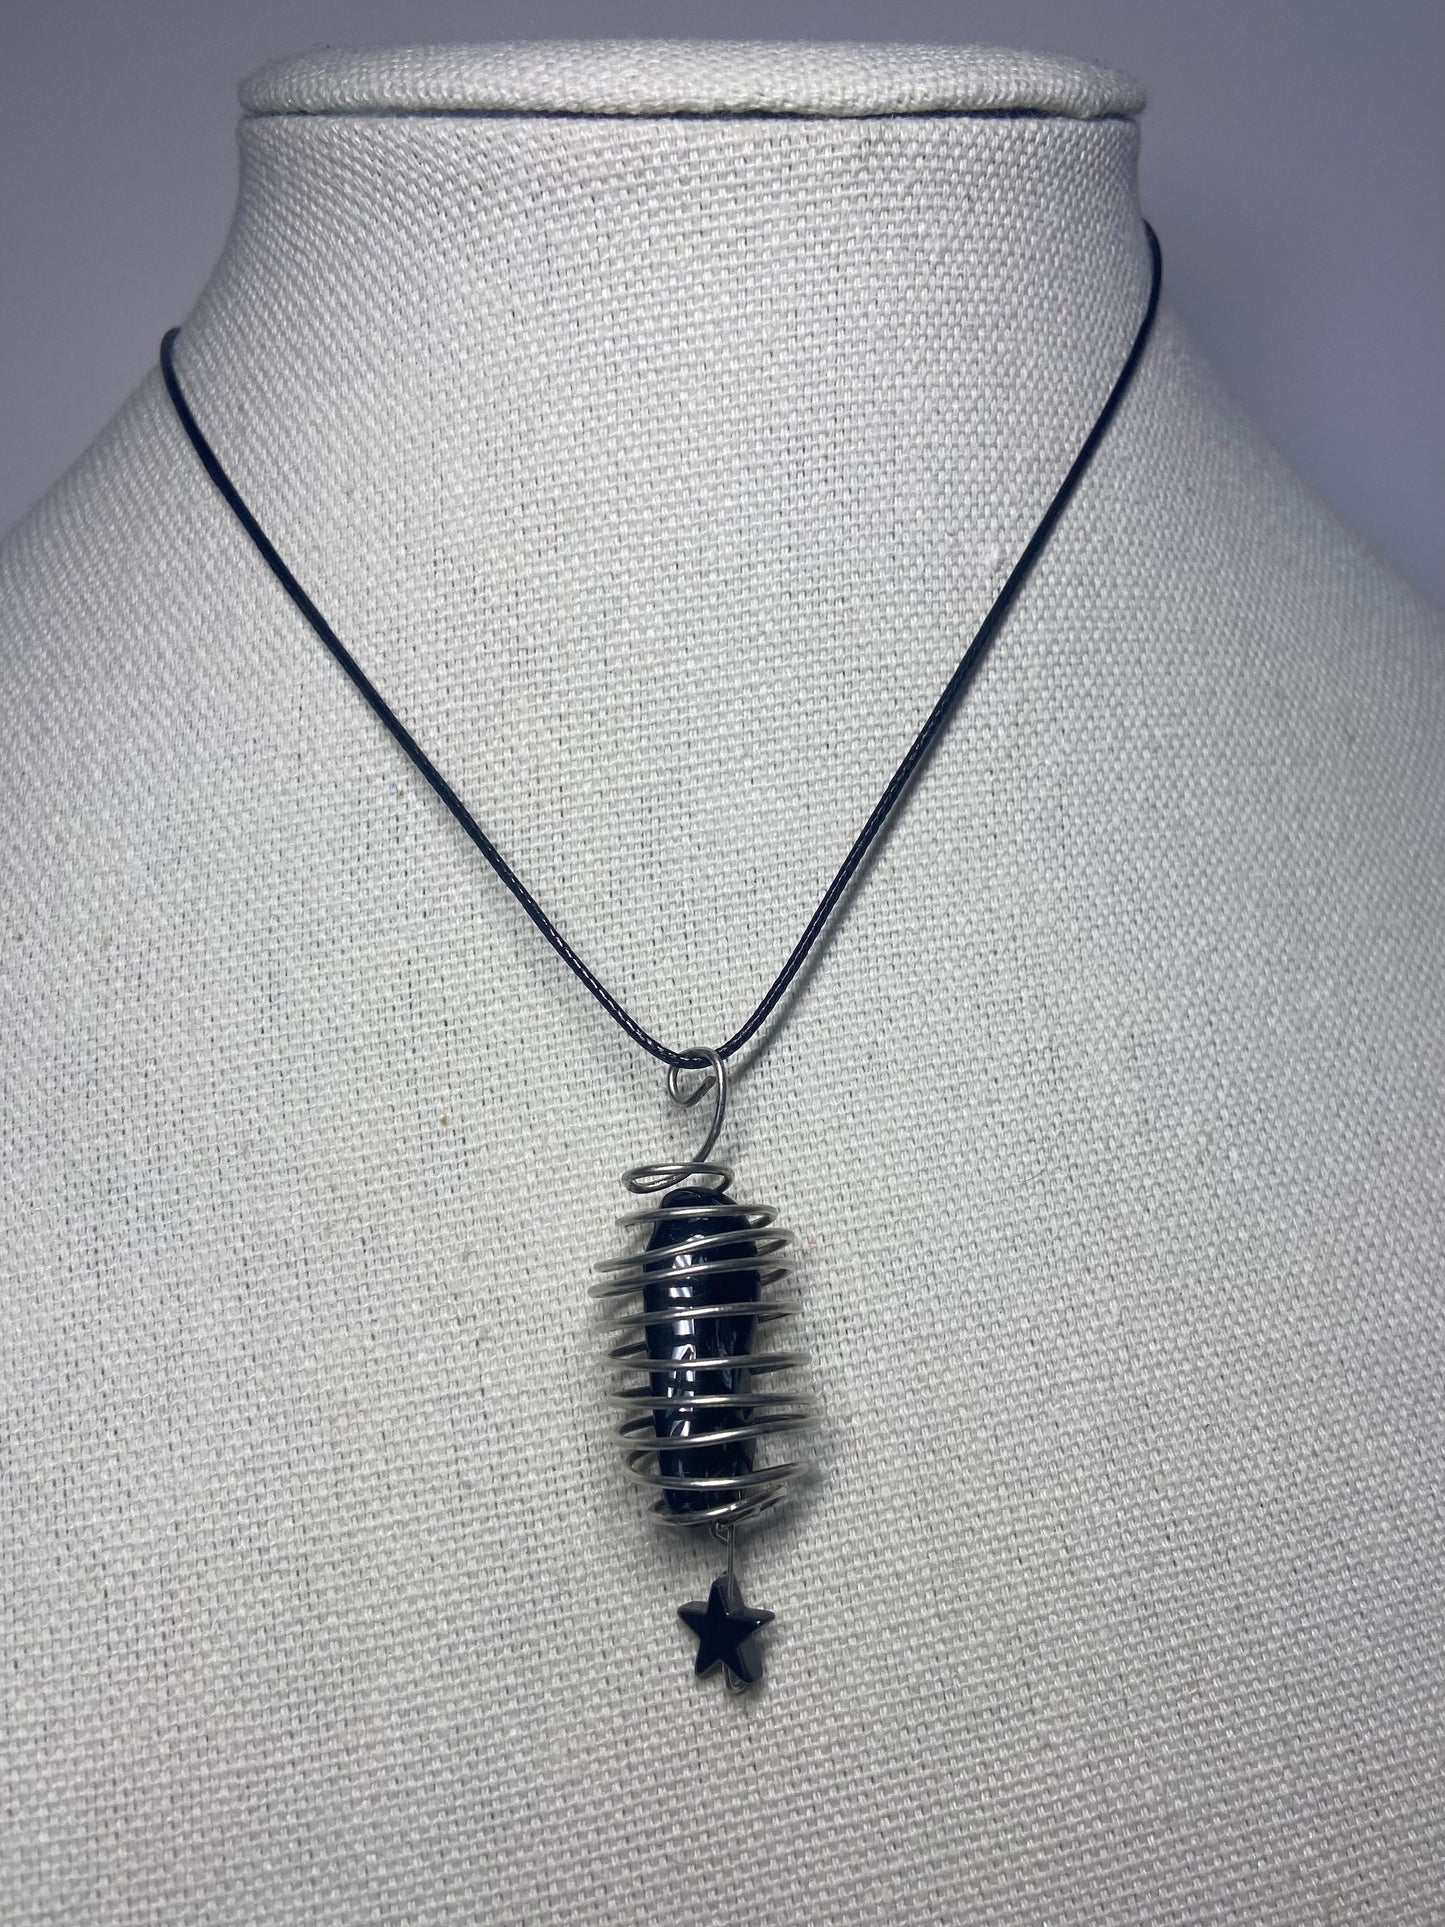 Necklace black obsidian